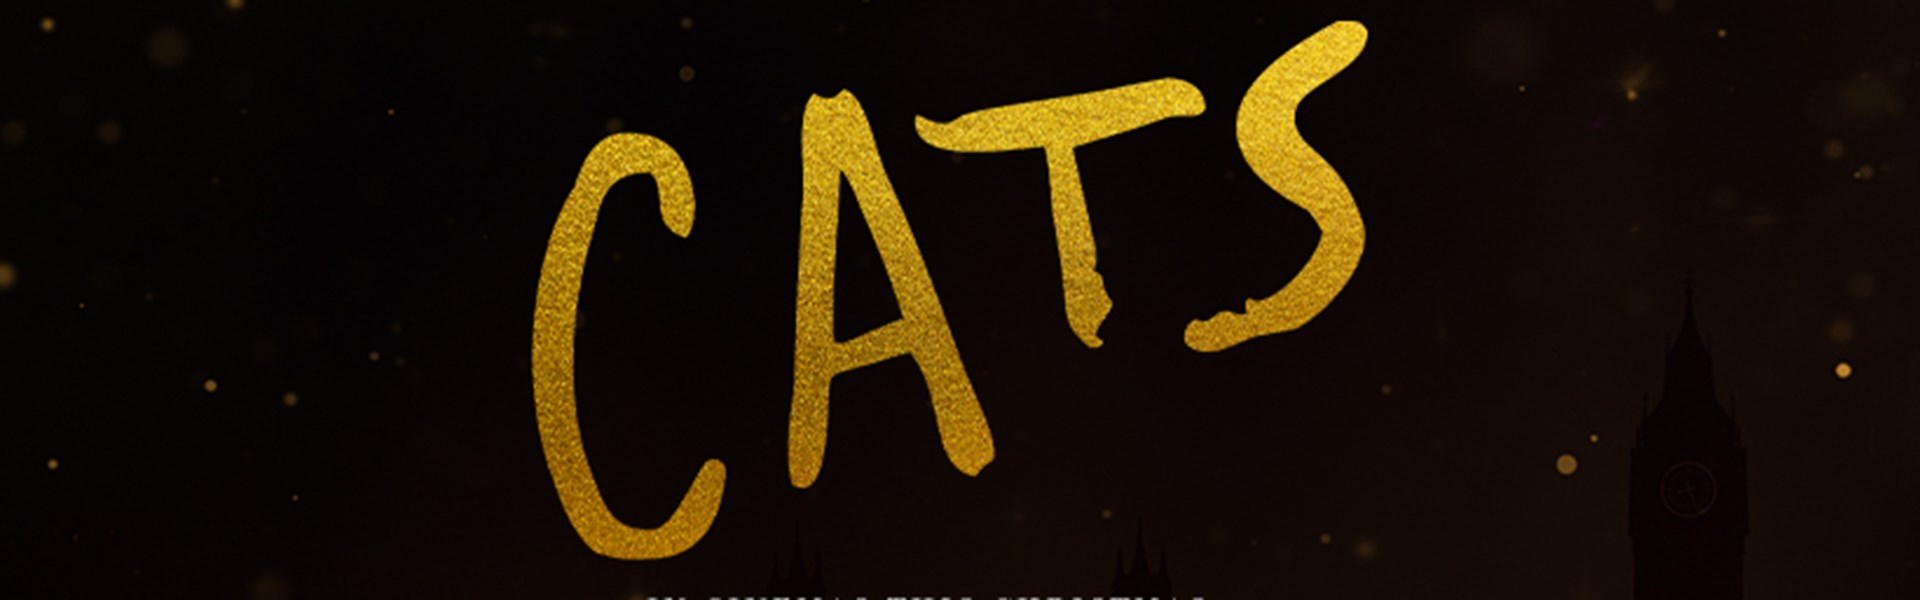 FILM: Cats